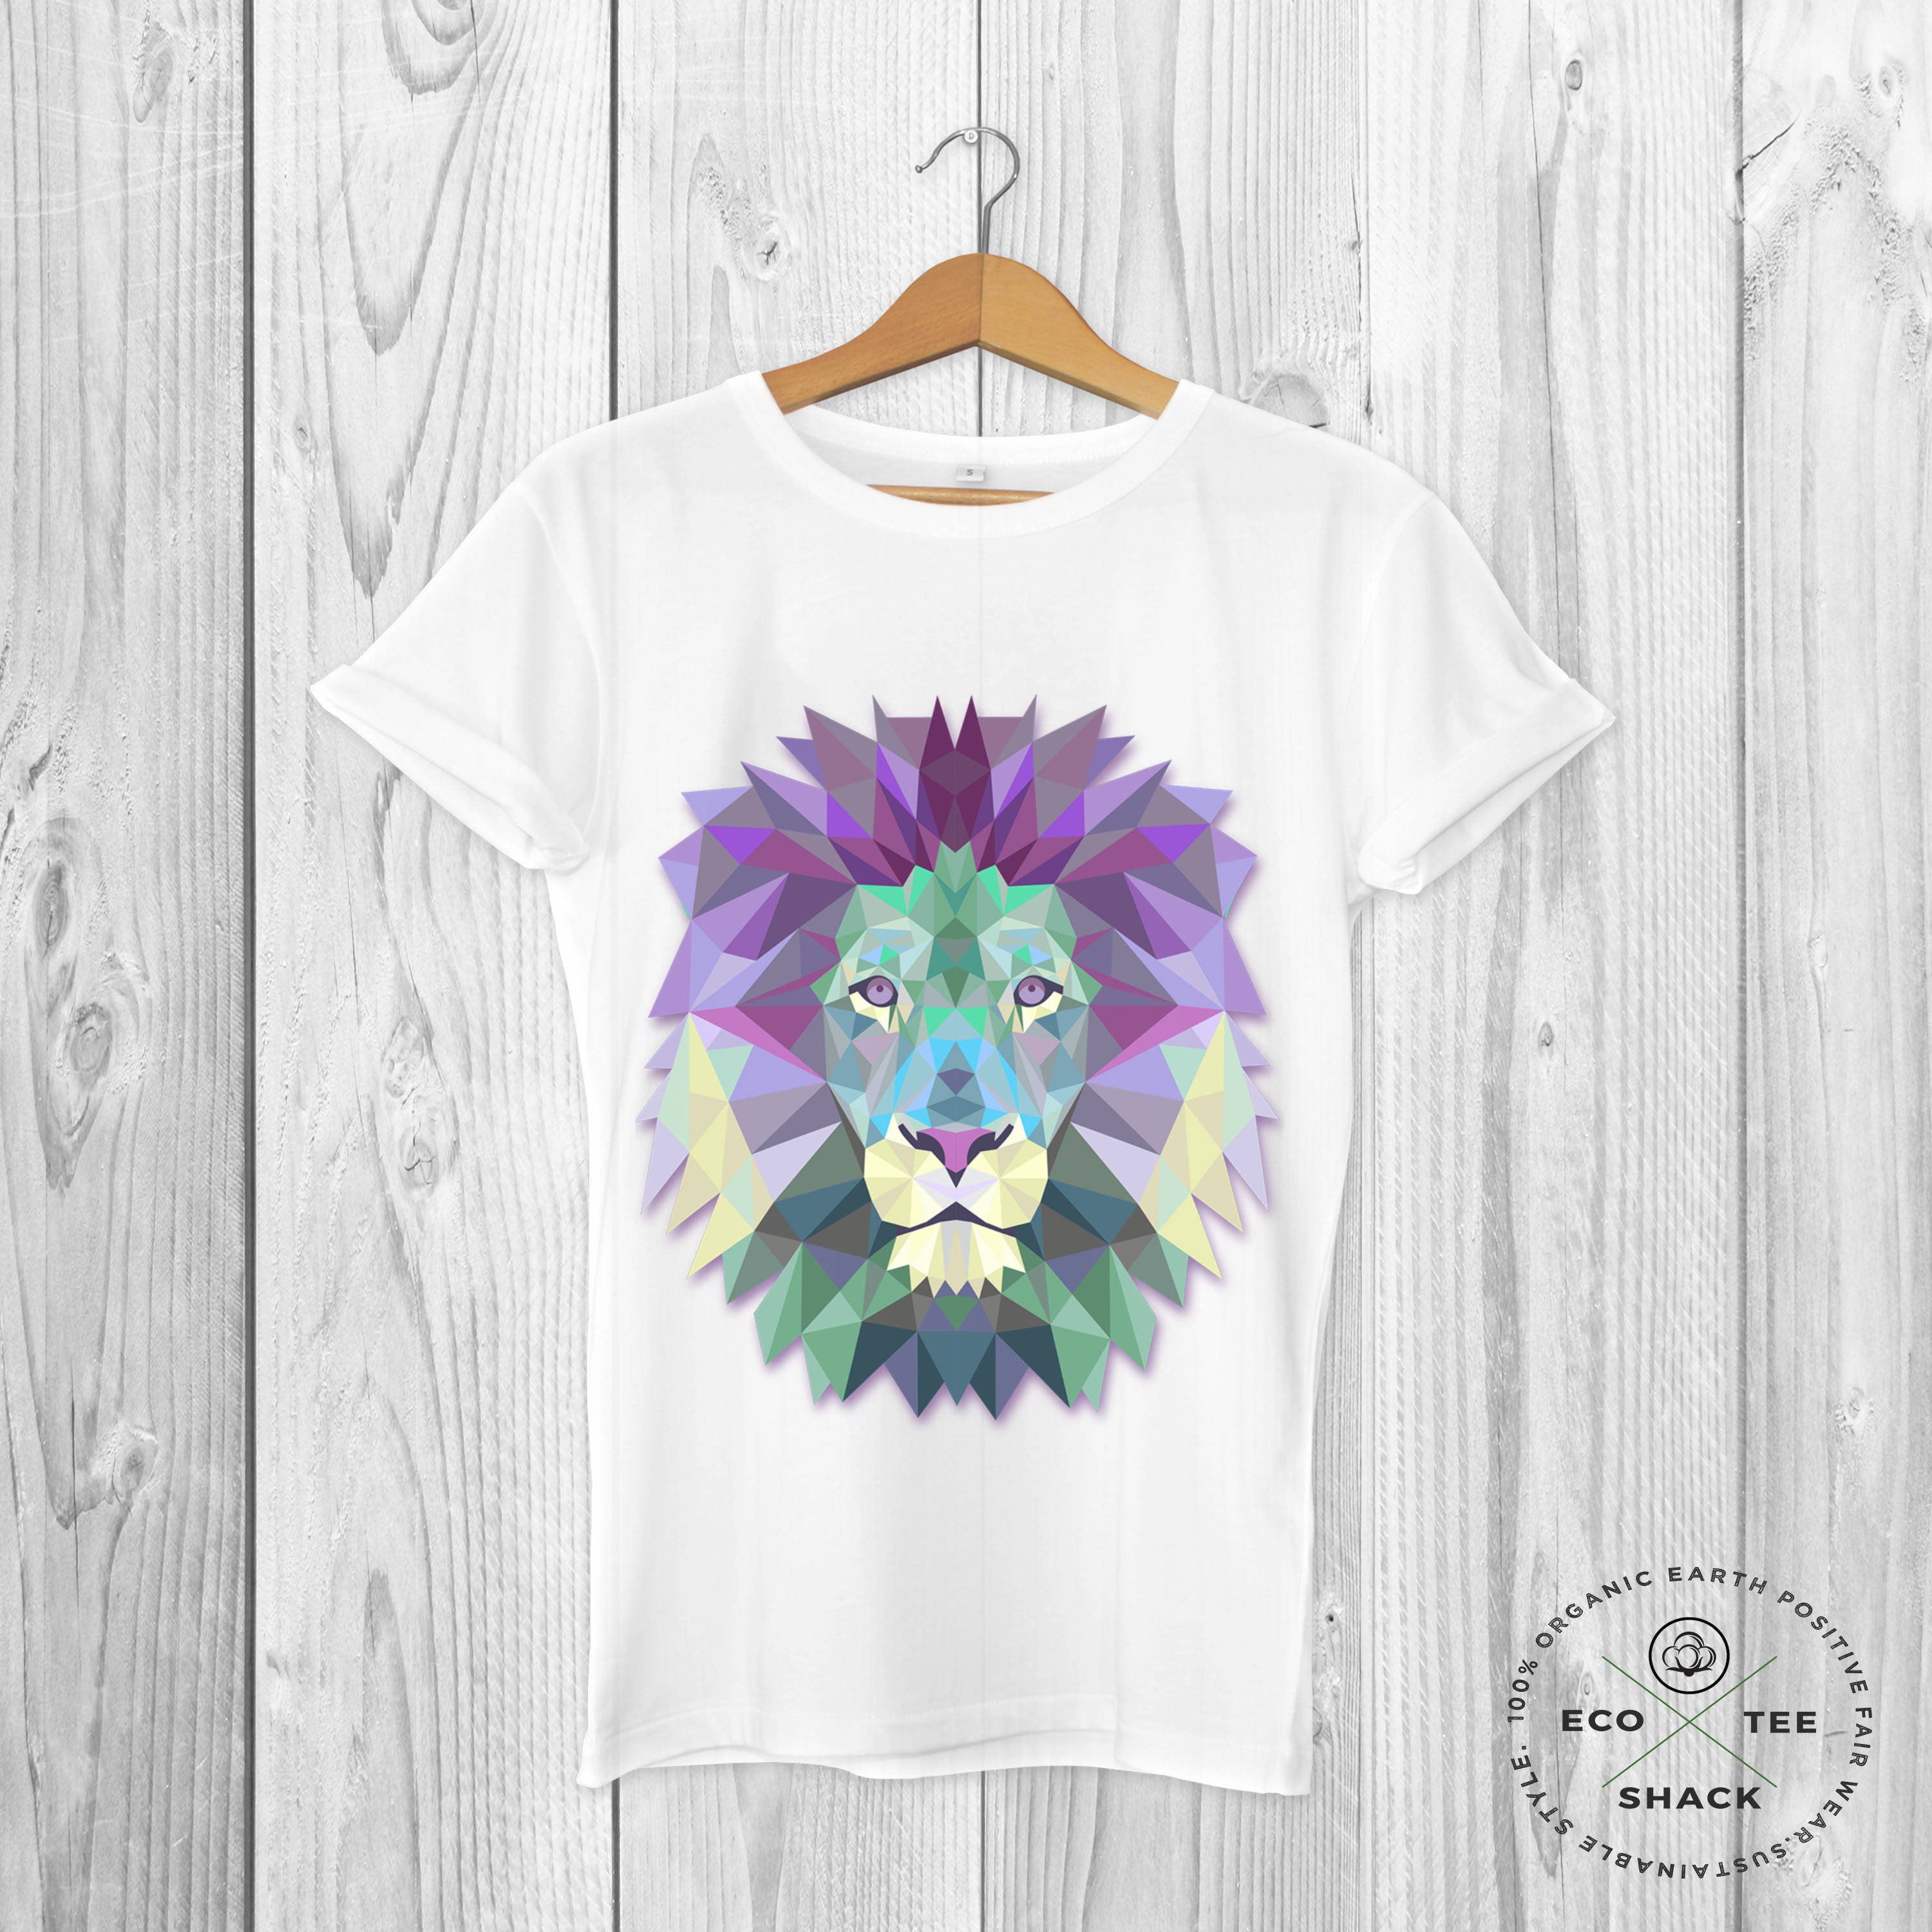 Lion T-shirt Graphic tee White shirt Animal shirt